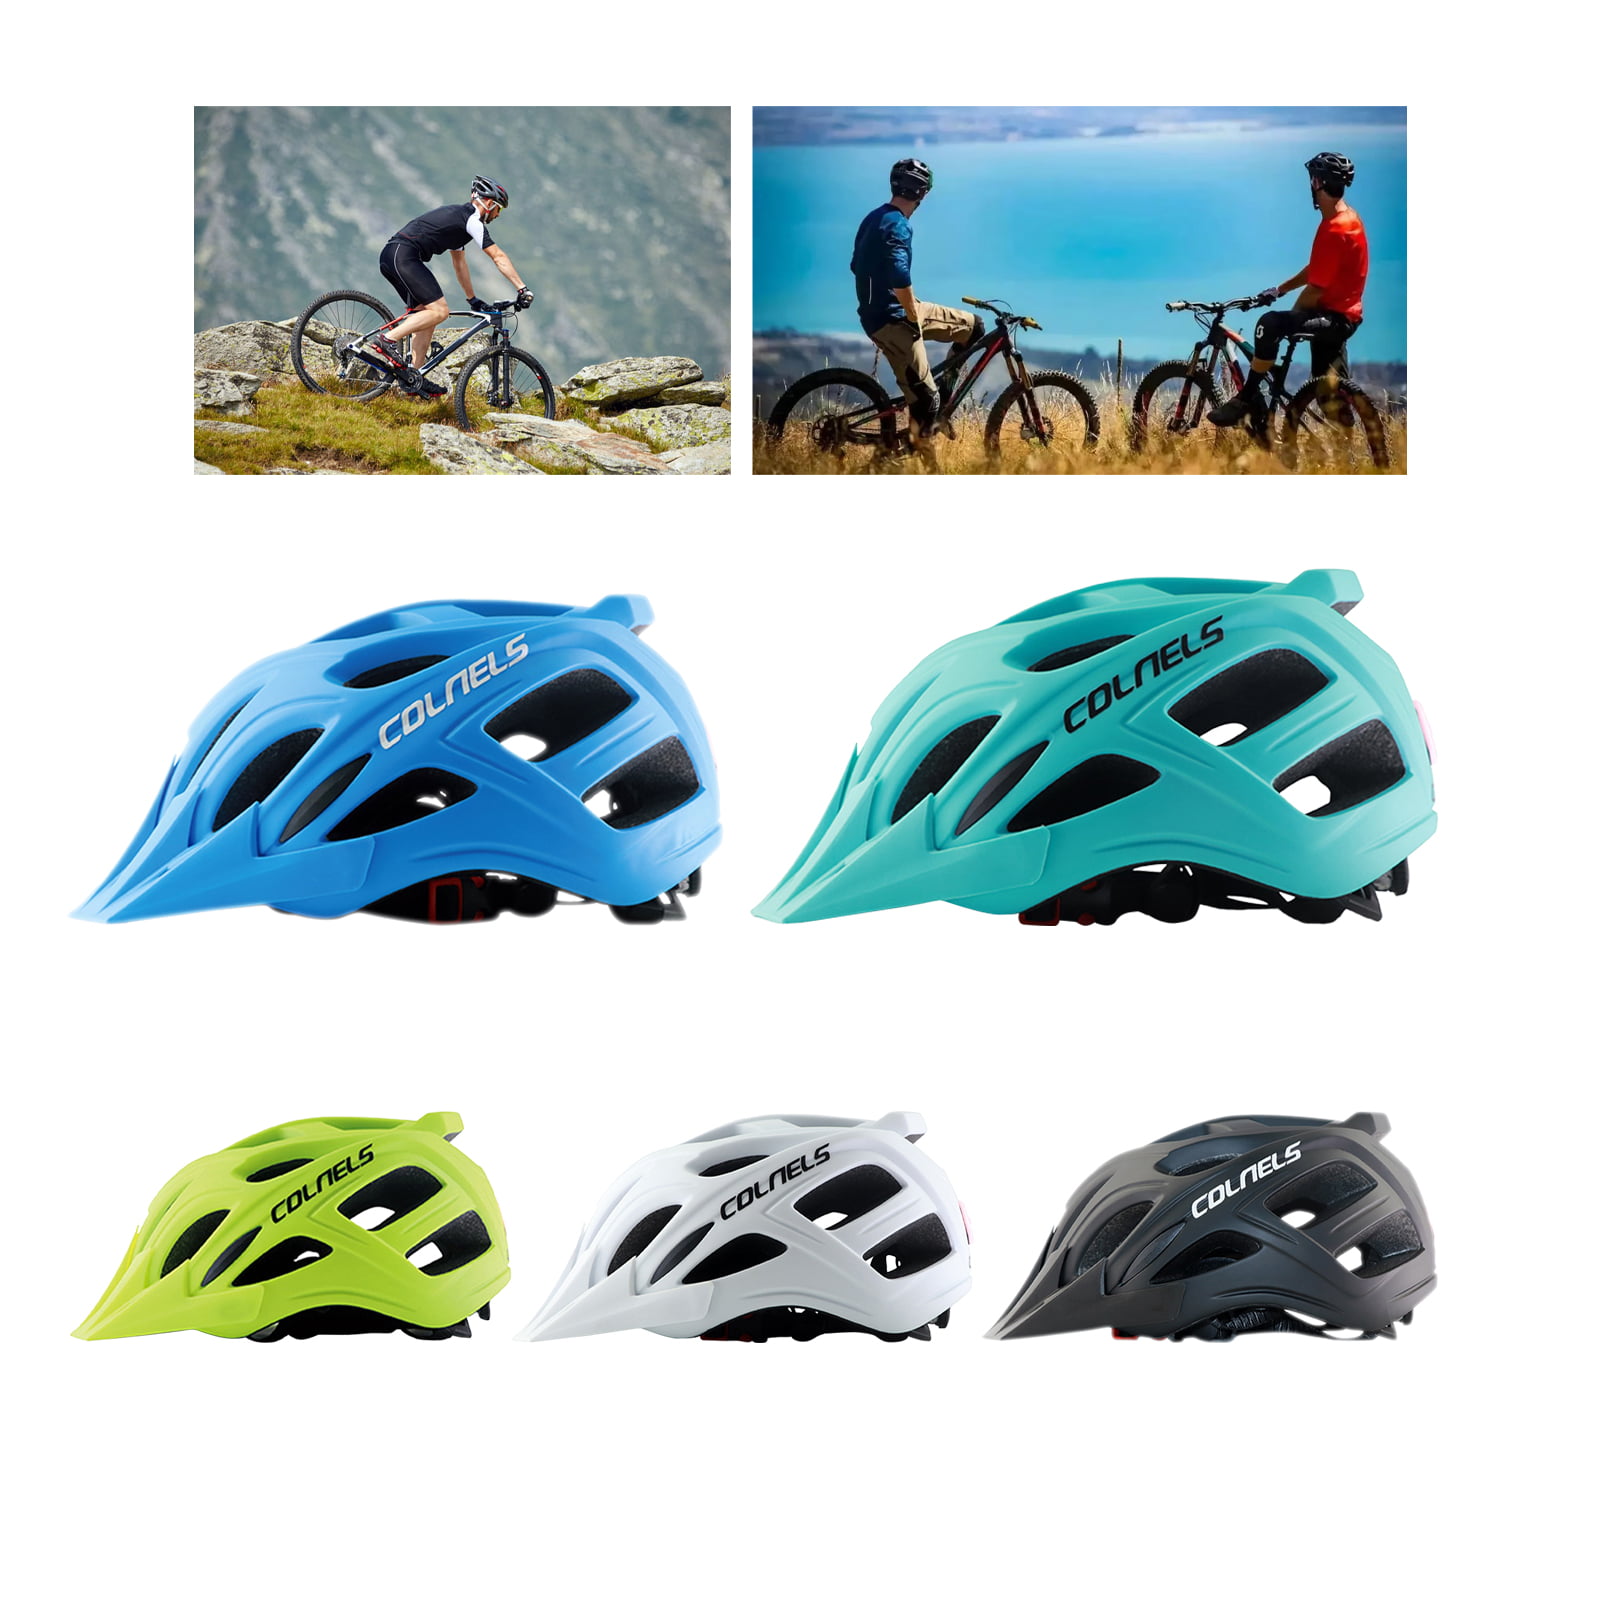 MERIDA Road Mountain E-Bike Bicycle Adult Bike Helmet for Men&Women Green L-size 